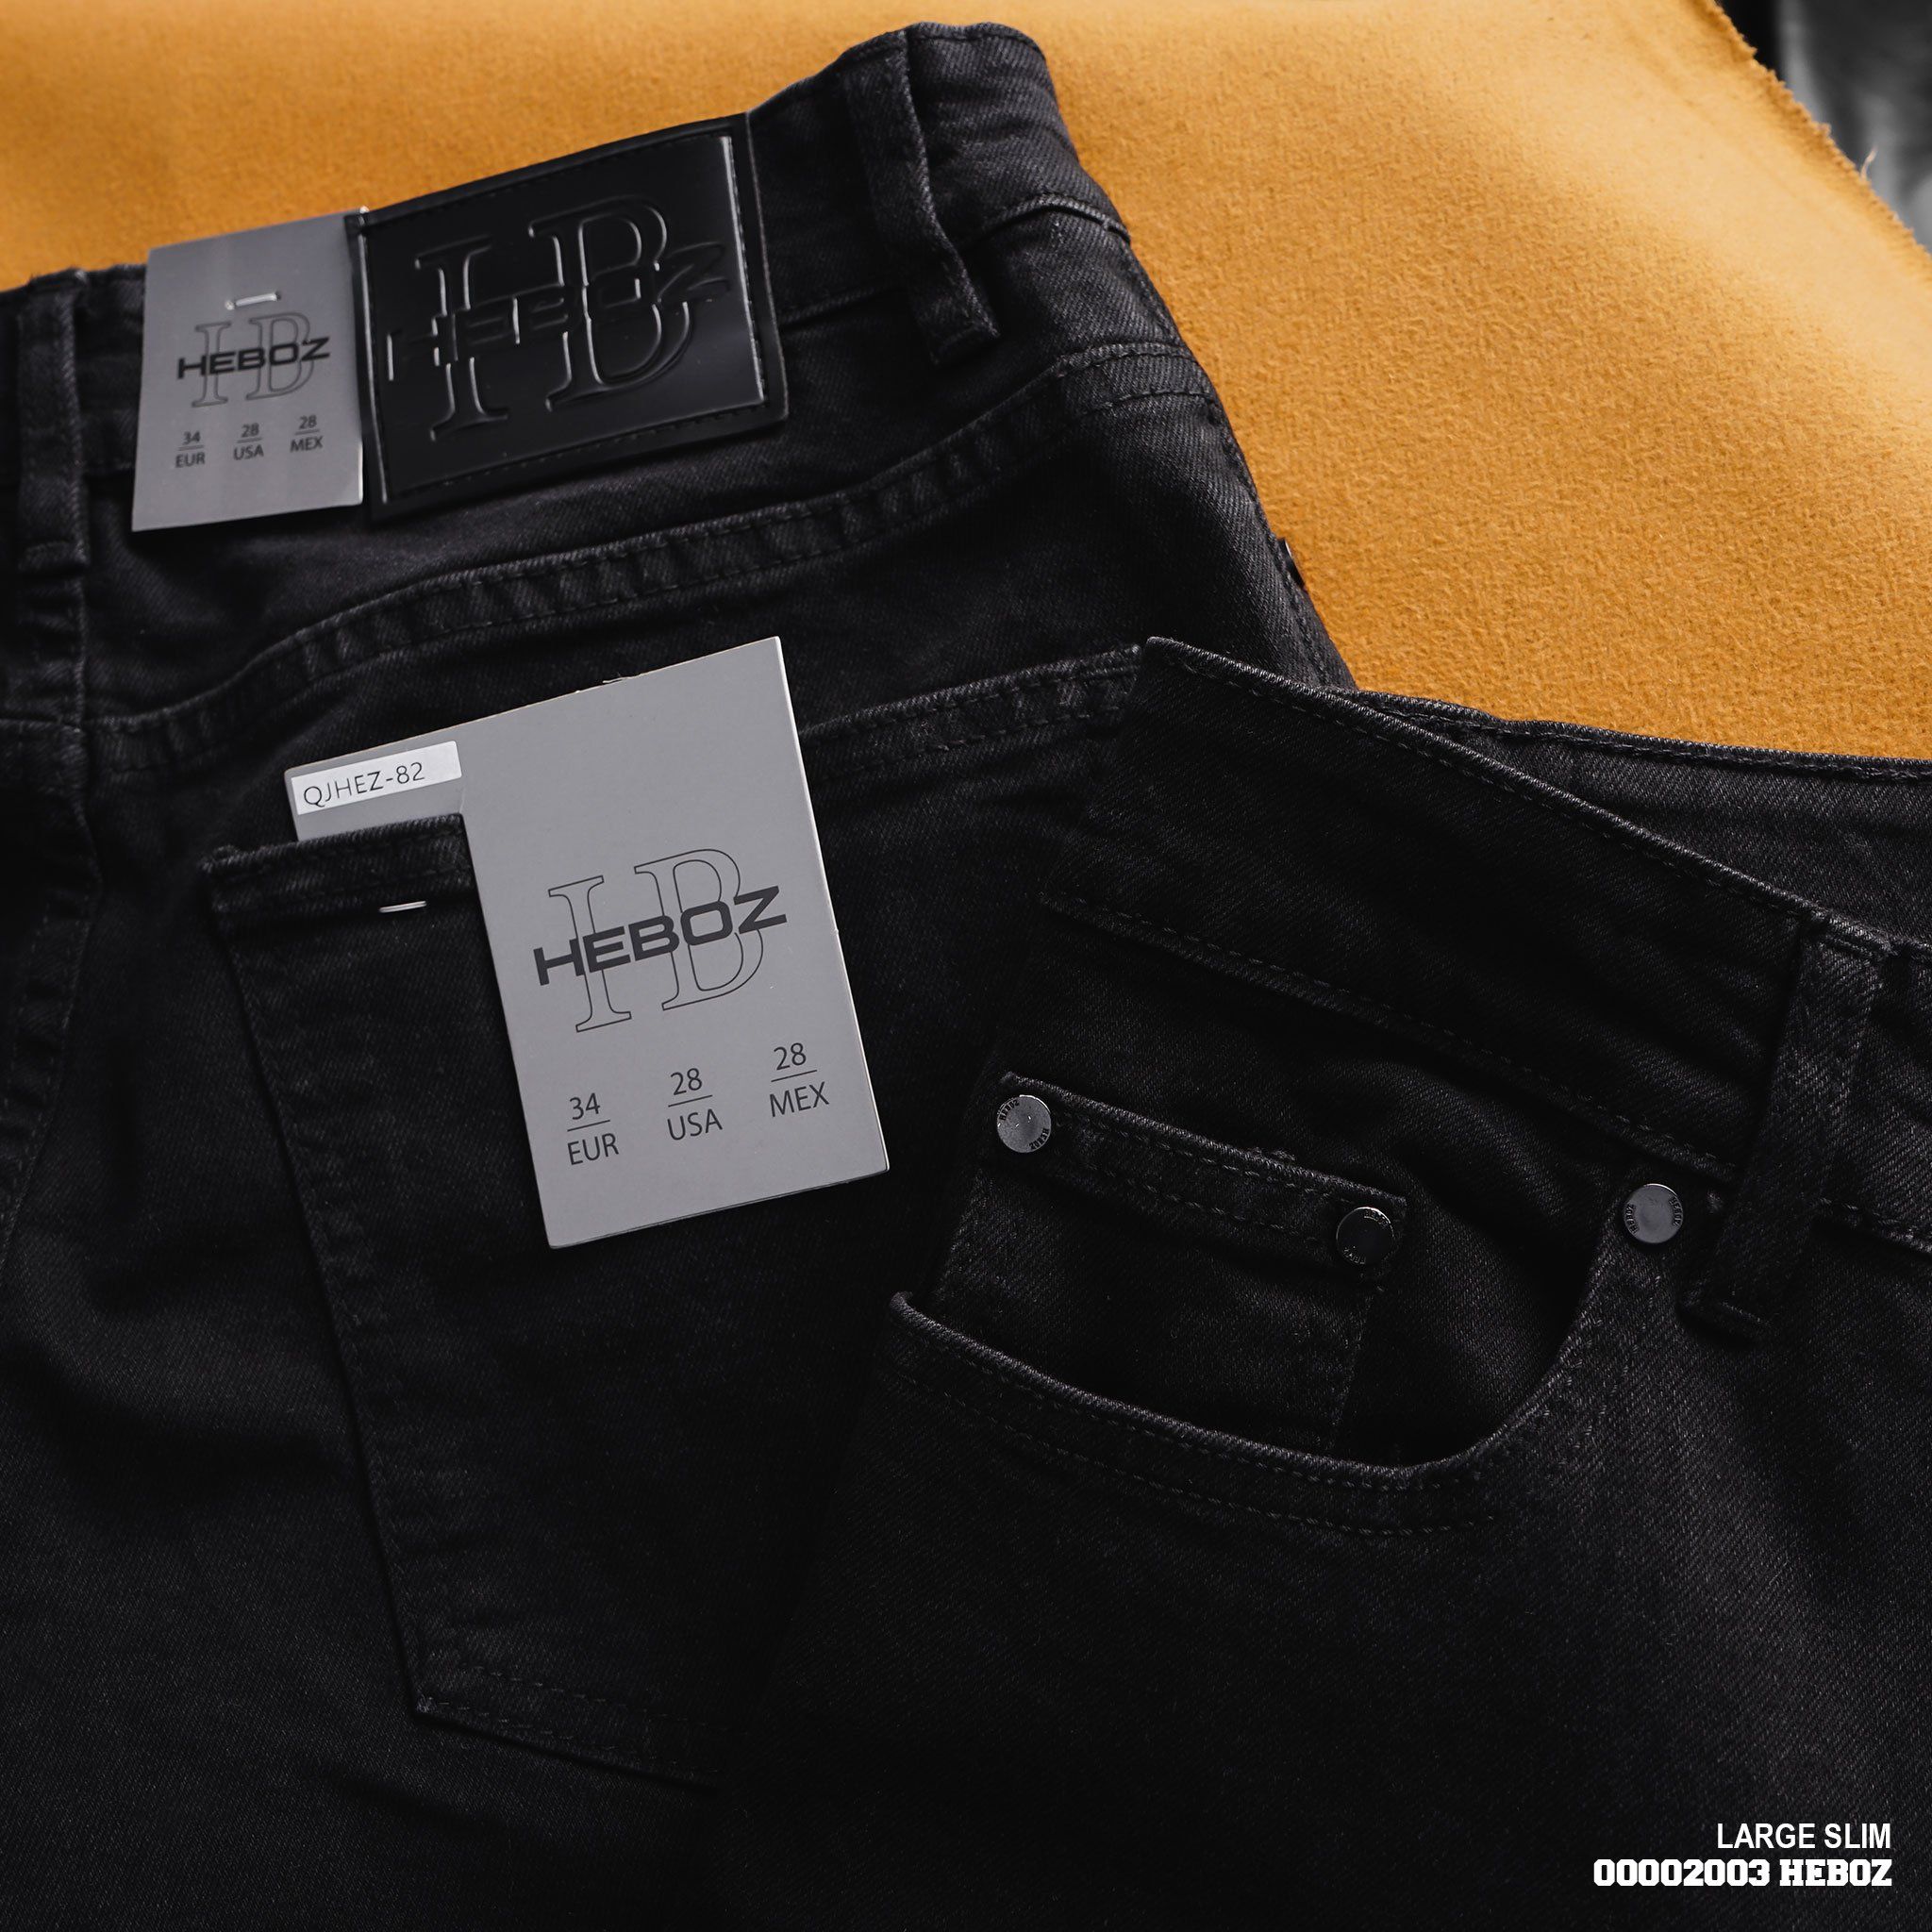  Quần jean đen Large slim Heboz 082 - 00002003 